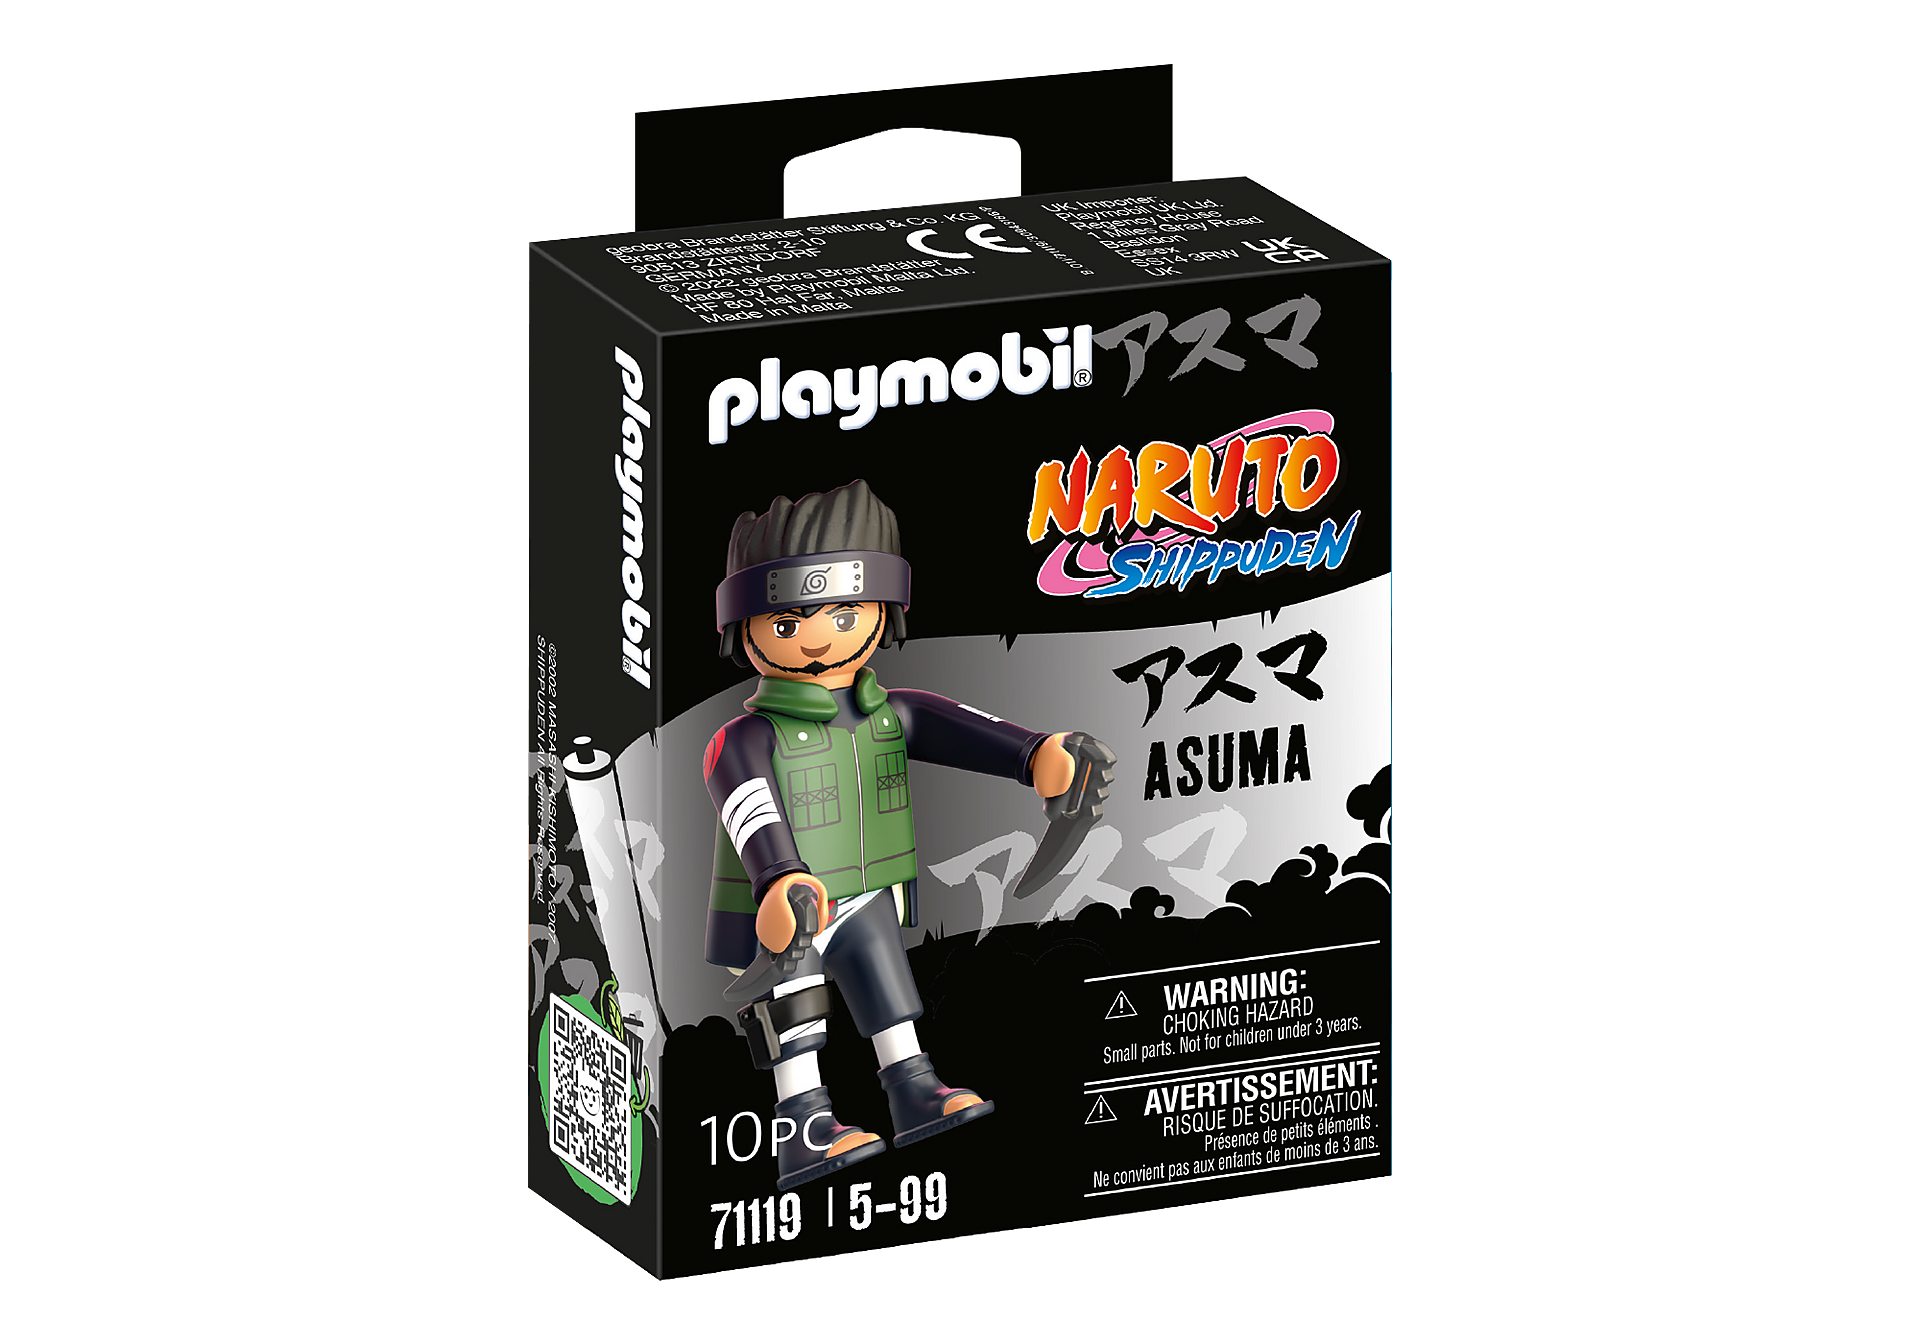 Playmobil Naruto Shippuden: Asuma 71119